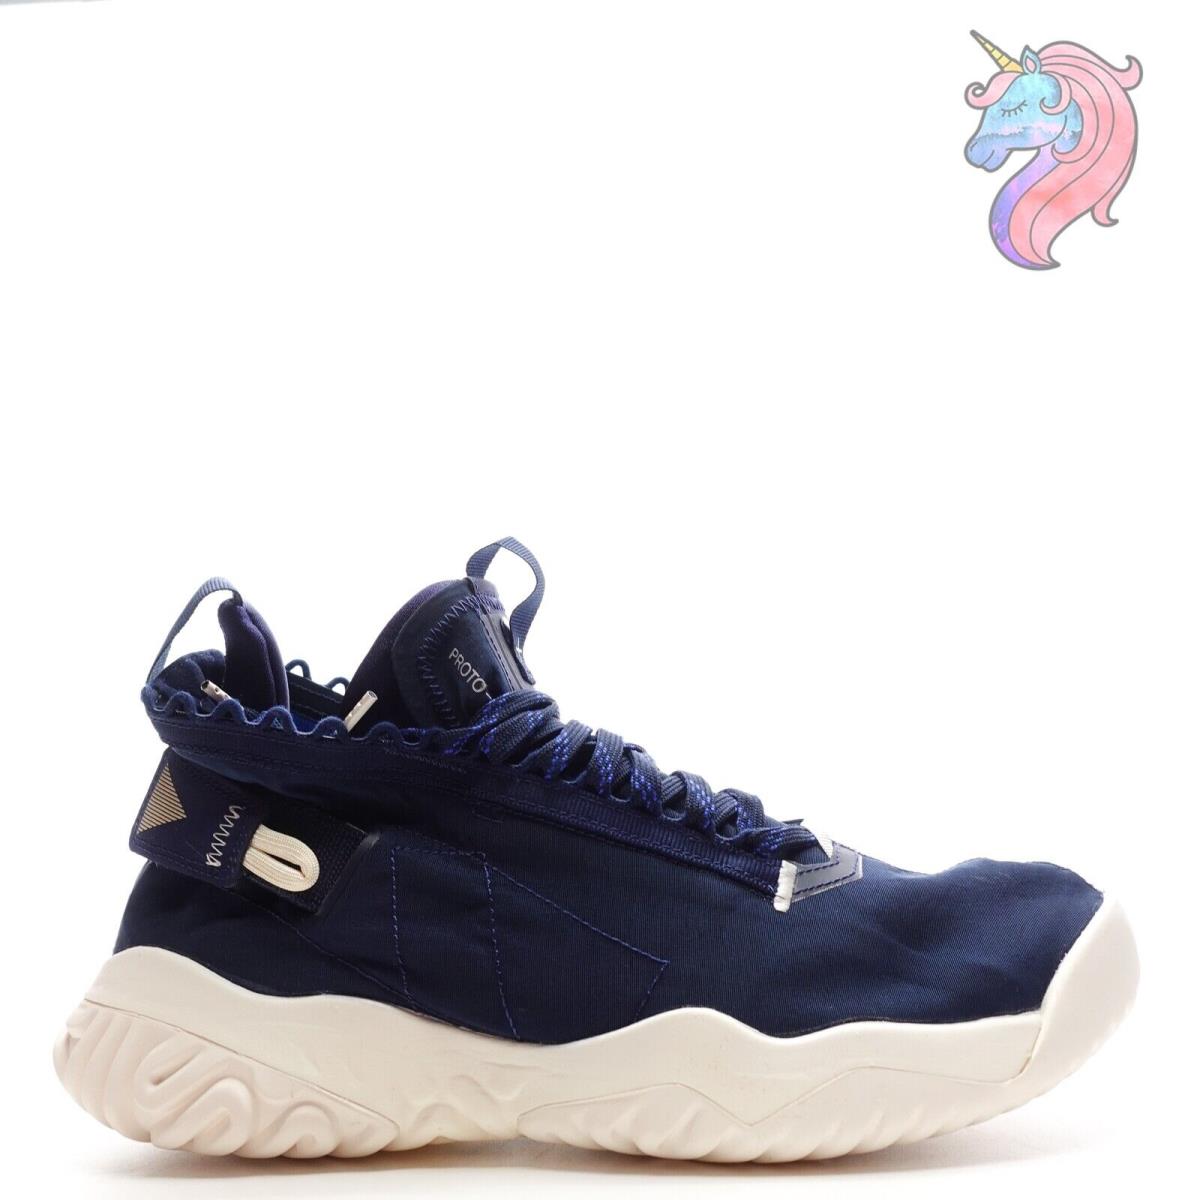 Nike Jordan Proto-react Navy Blue Basketball Shoes BV1654-400 Mens Size 10.5